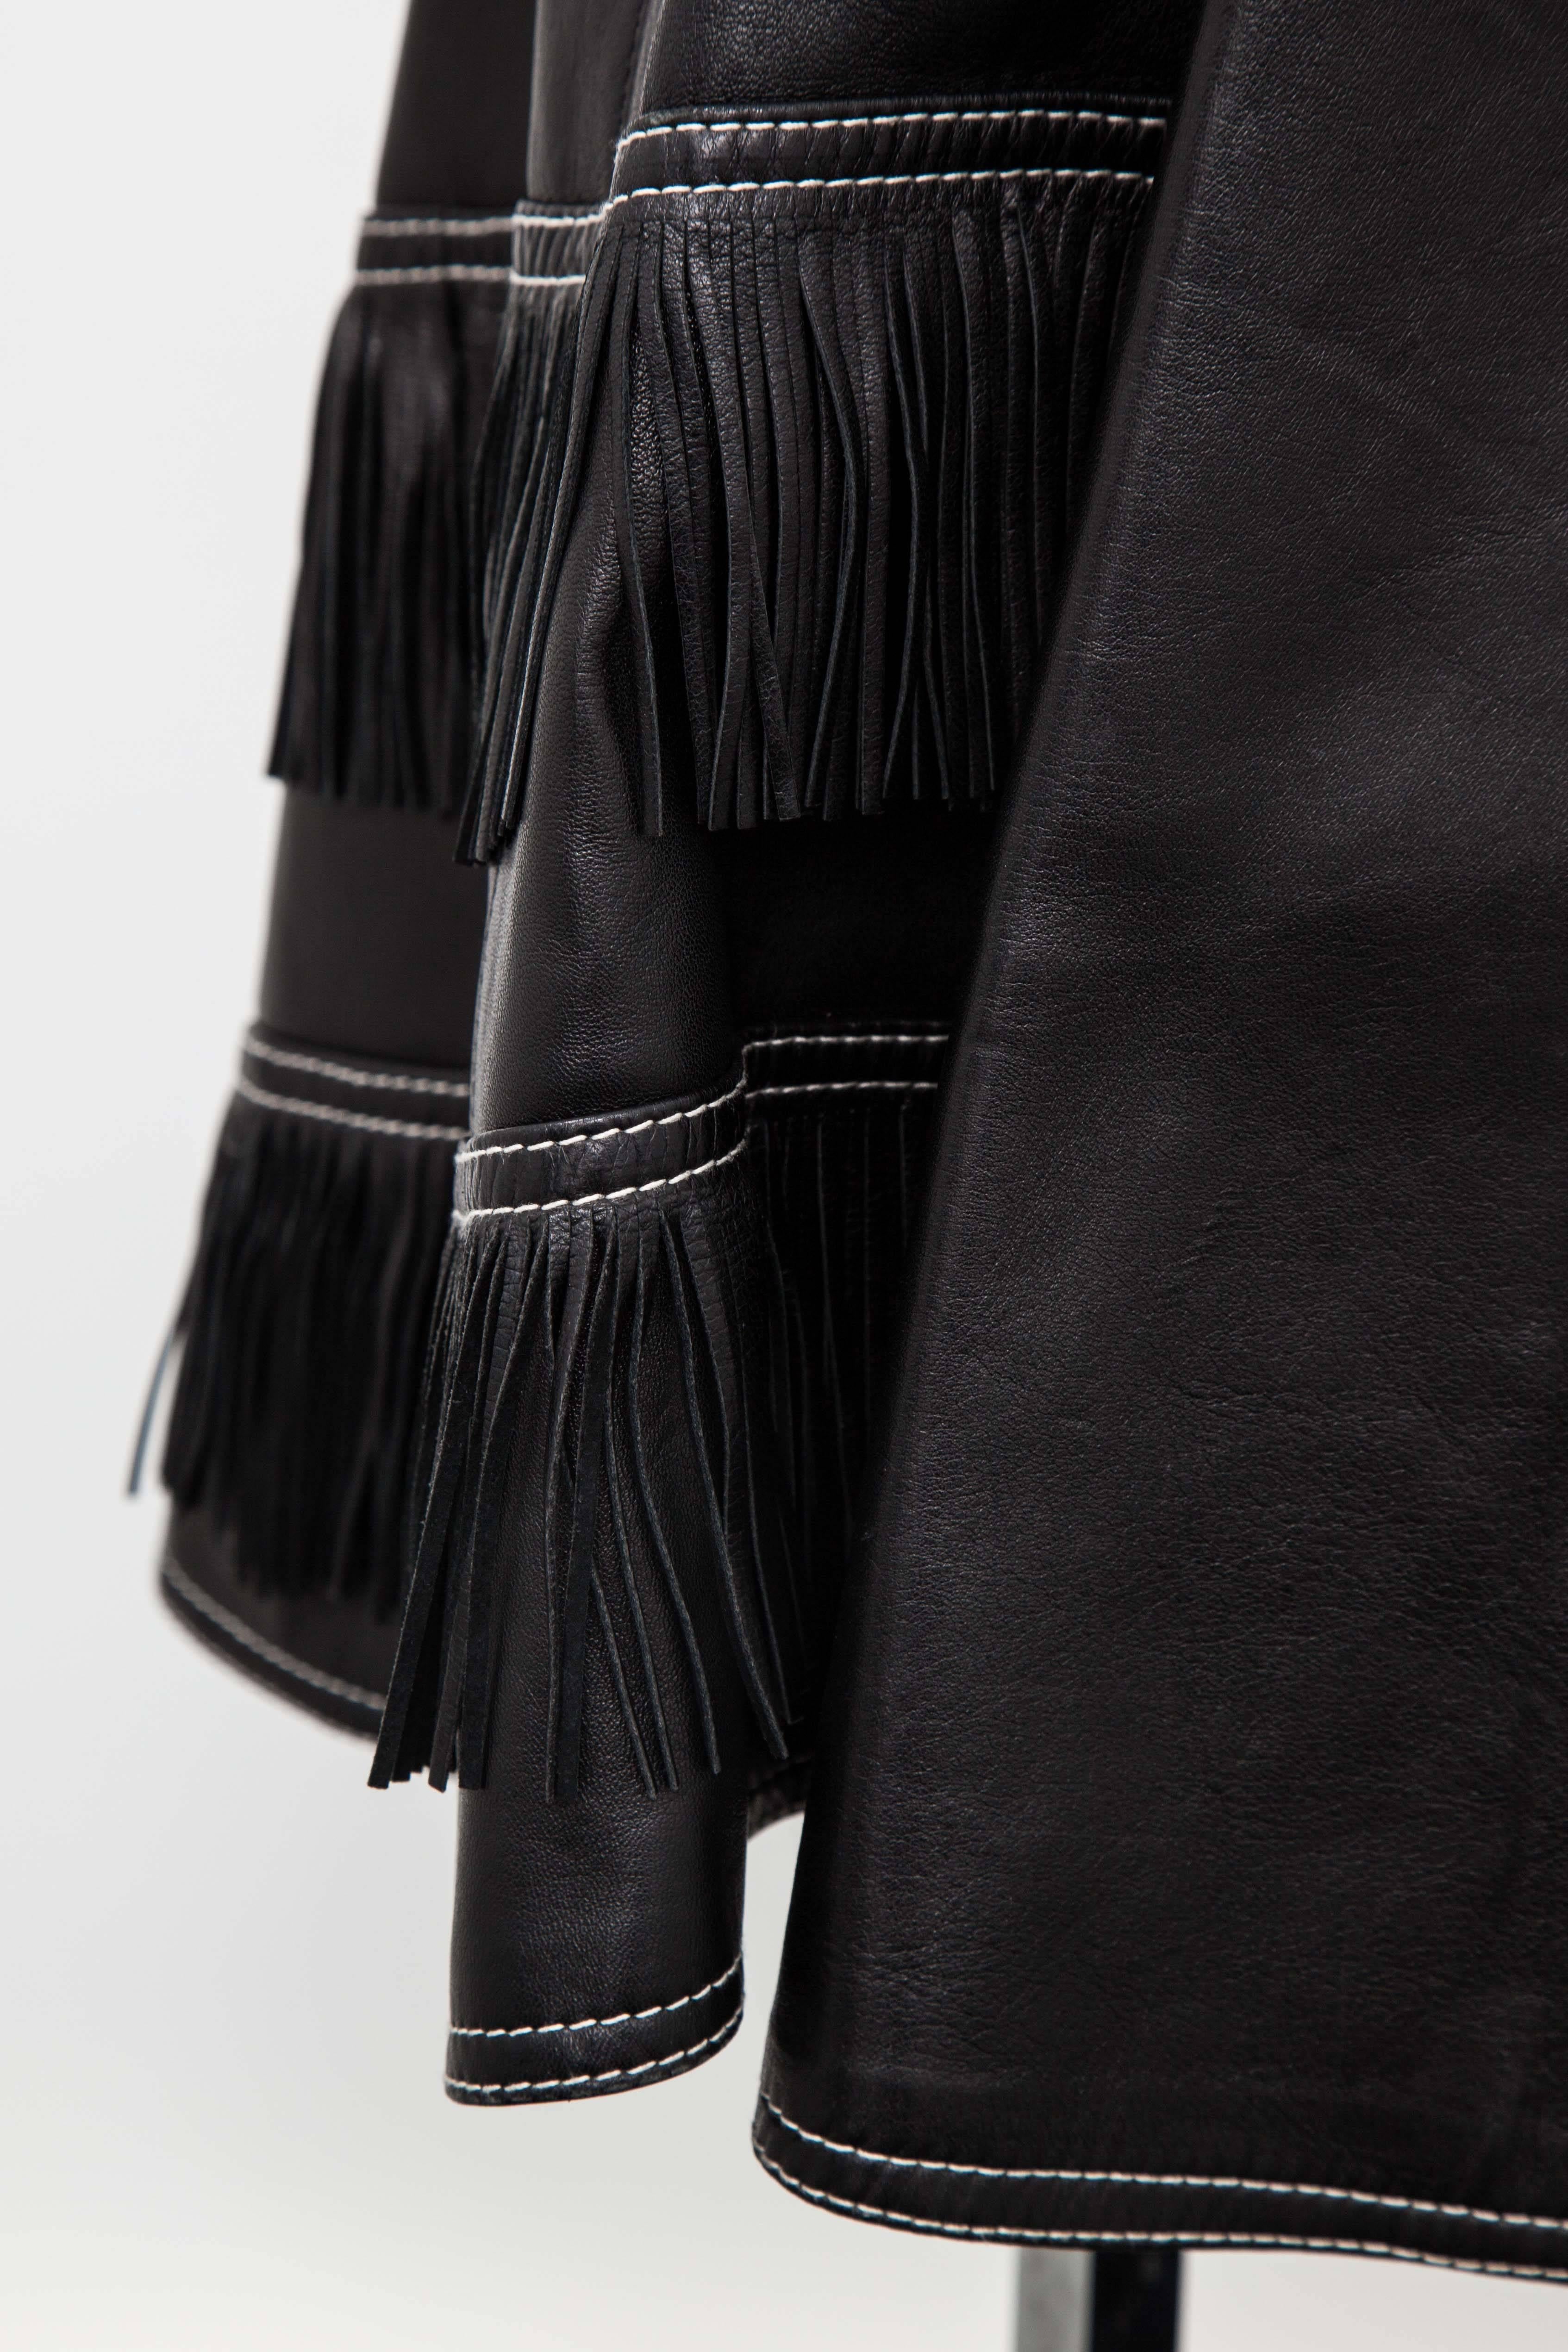 Gianni Versace Iconic 1992 Runway Black Leather Fringe Skirt For Sale 2